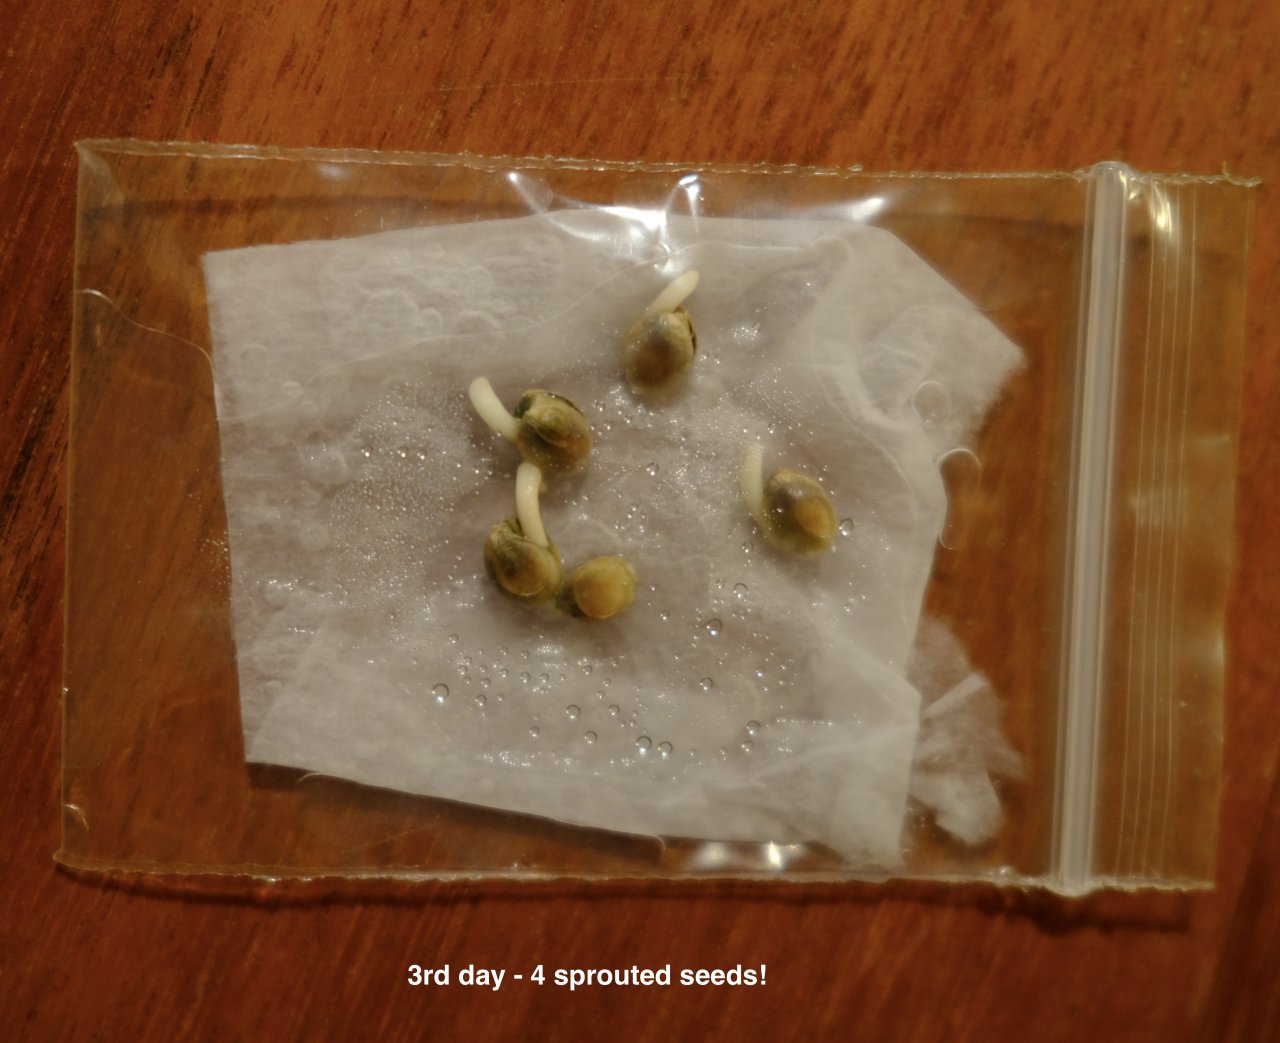 Mulanje 16 day old seeds to test germination